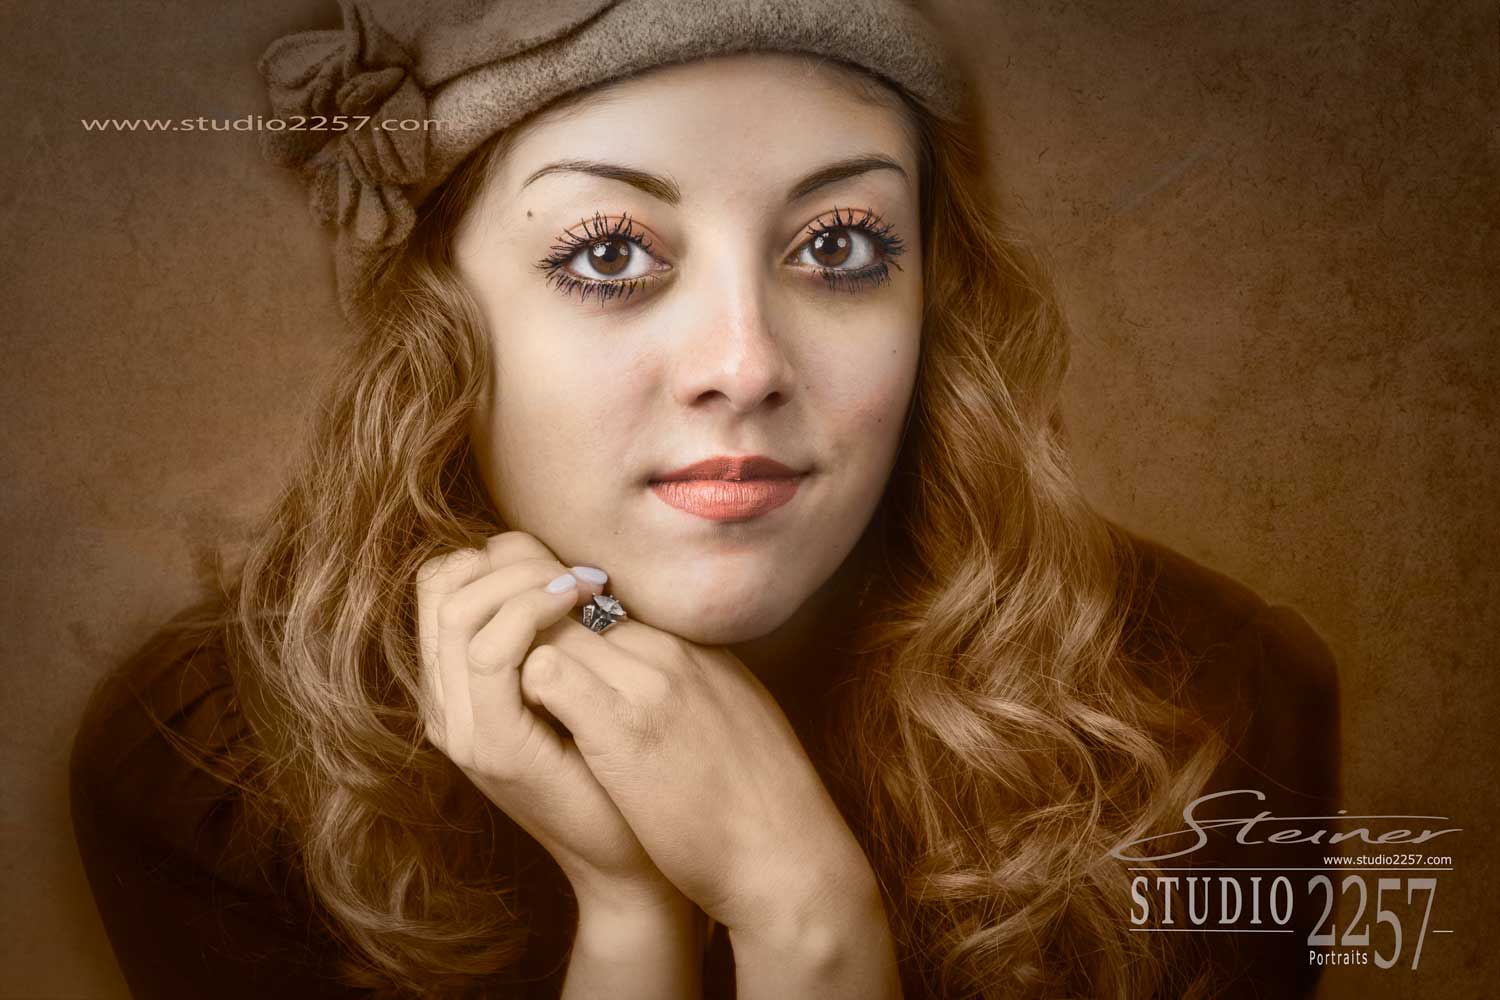 face-on-hands-close-up-high-school-senior-girl-portrait-studio2257-mesa-az-.jpg